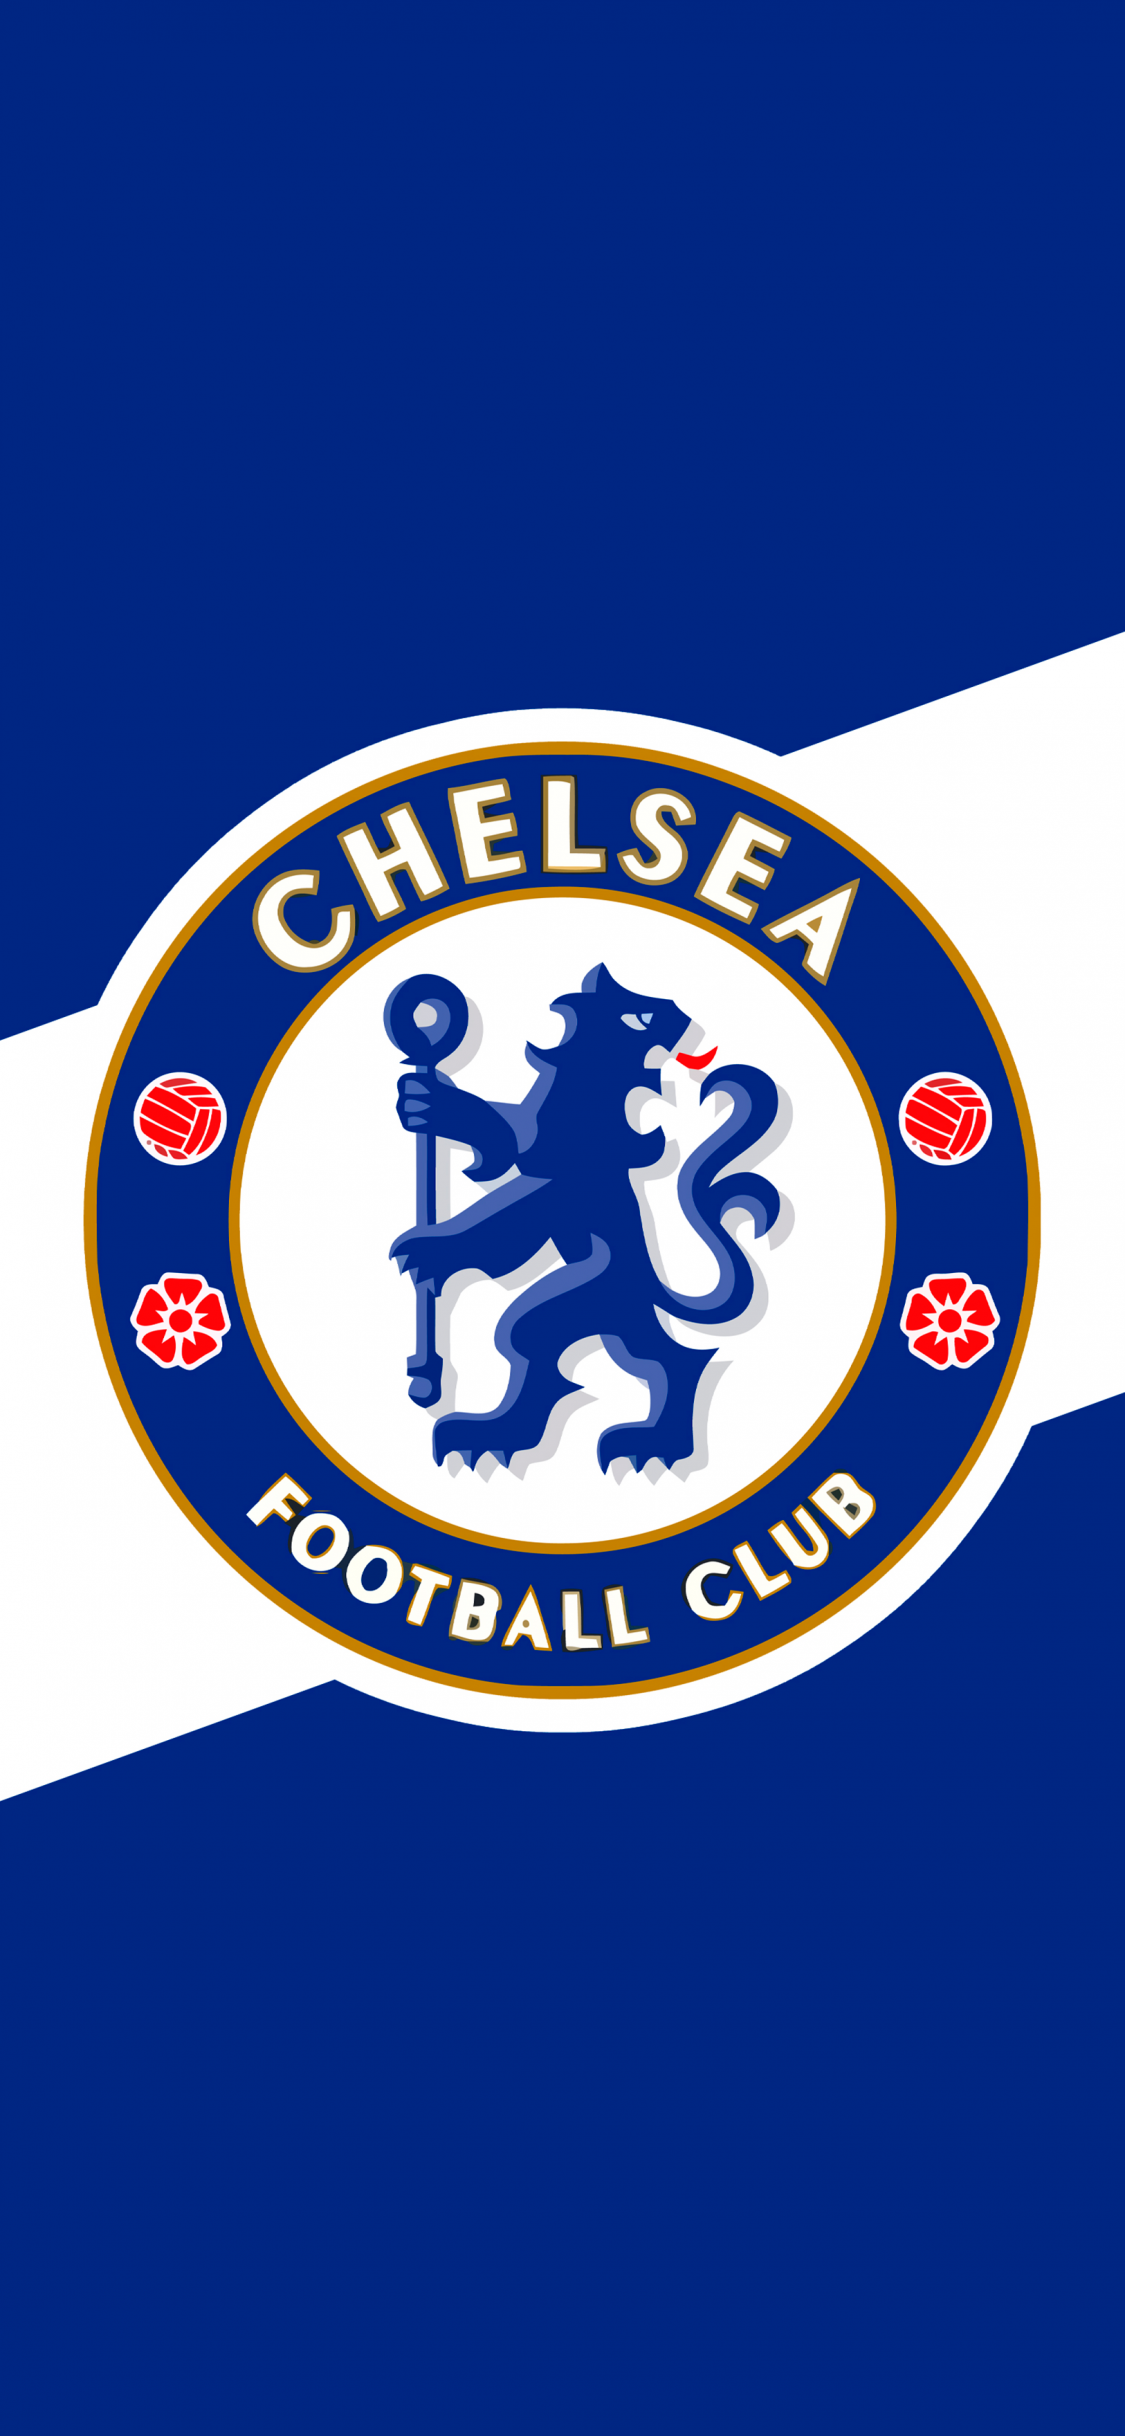 Chelsea FC Wallpaper 4K, Football club, 5K, Sports, #2706